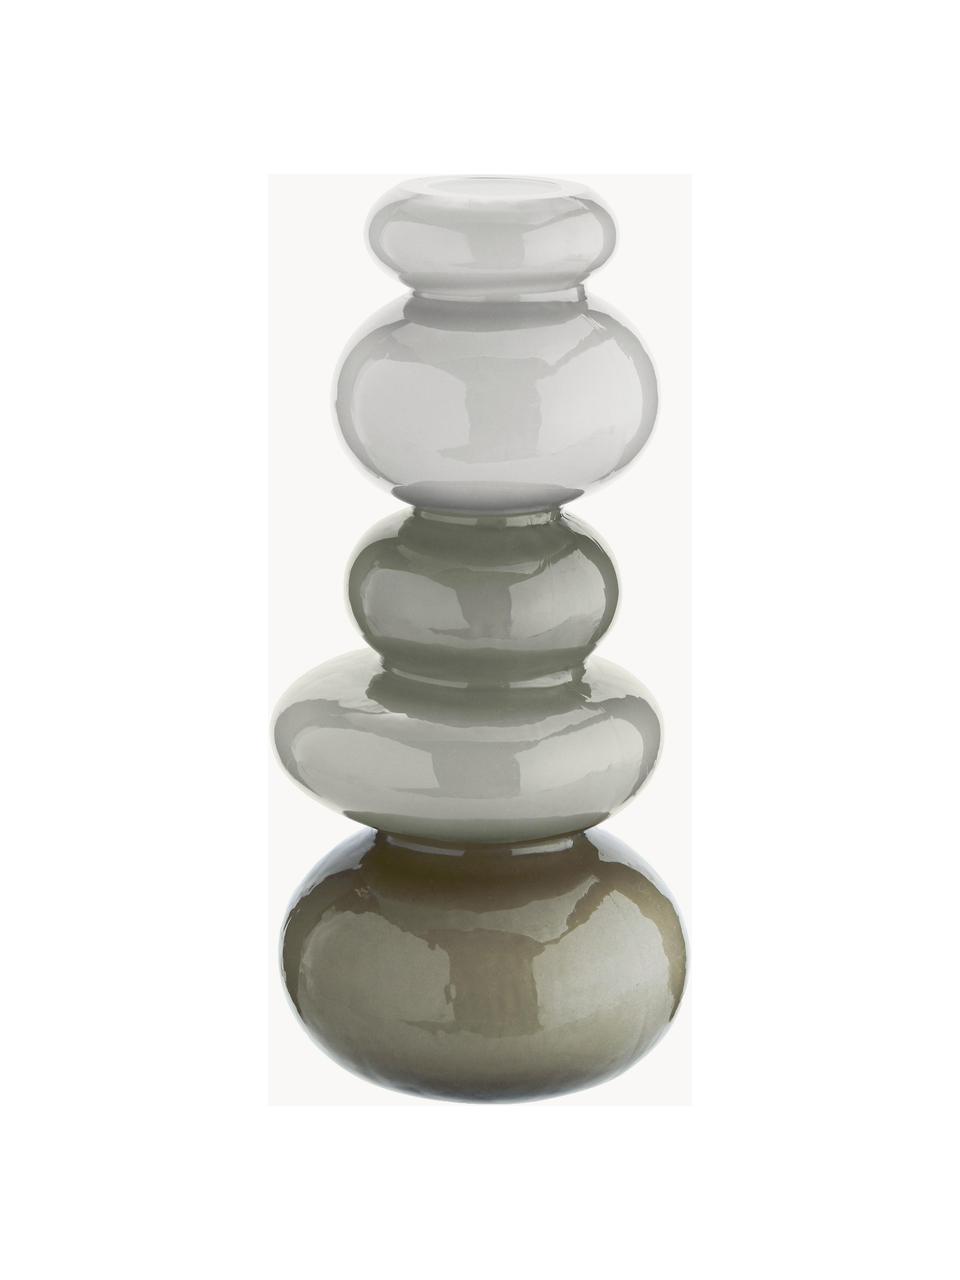 Vaso piccolo in vetro Stone, alt. 24 cm, Vetro, Tonalità grigie, Ø 11 x Alt. 24 cm